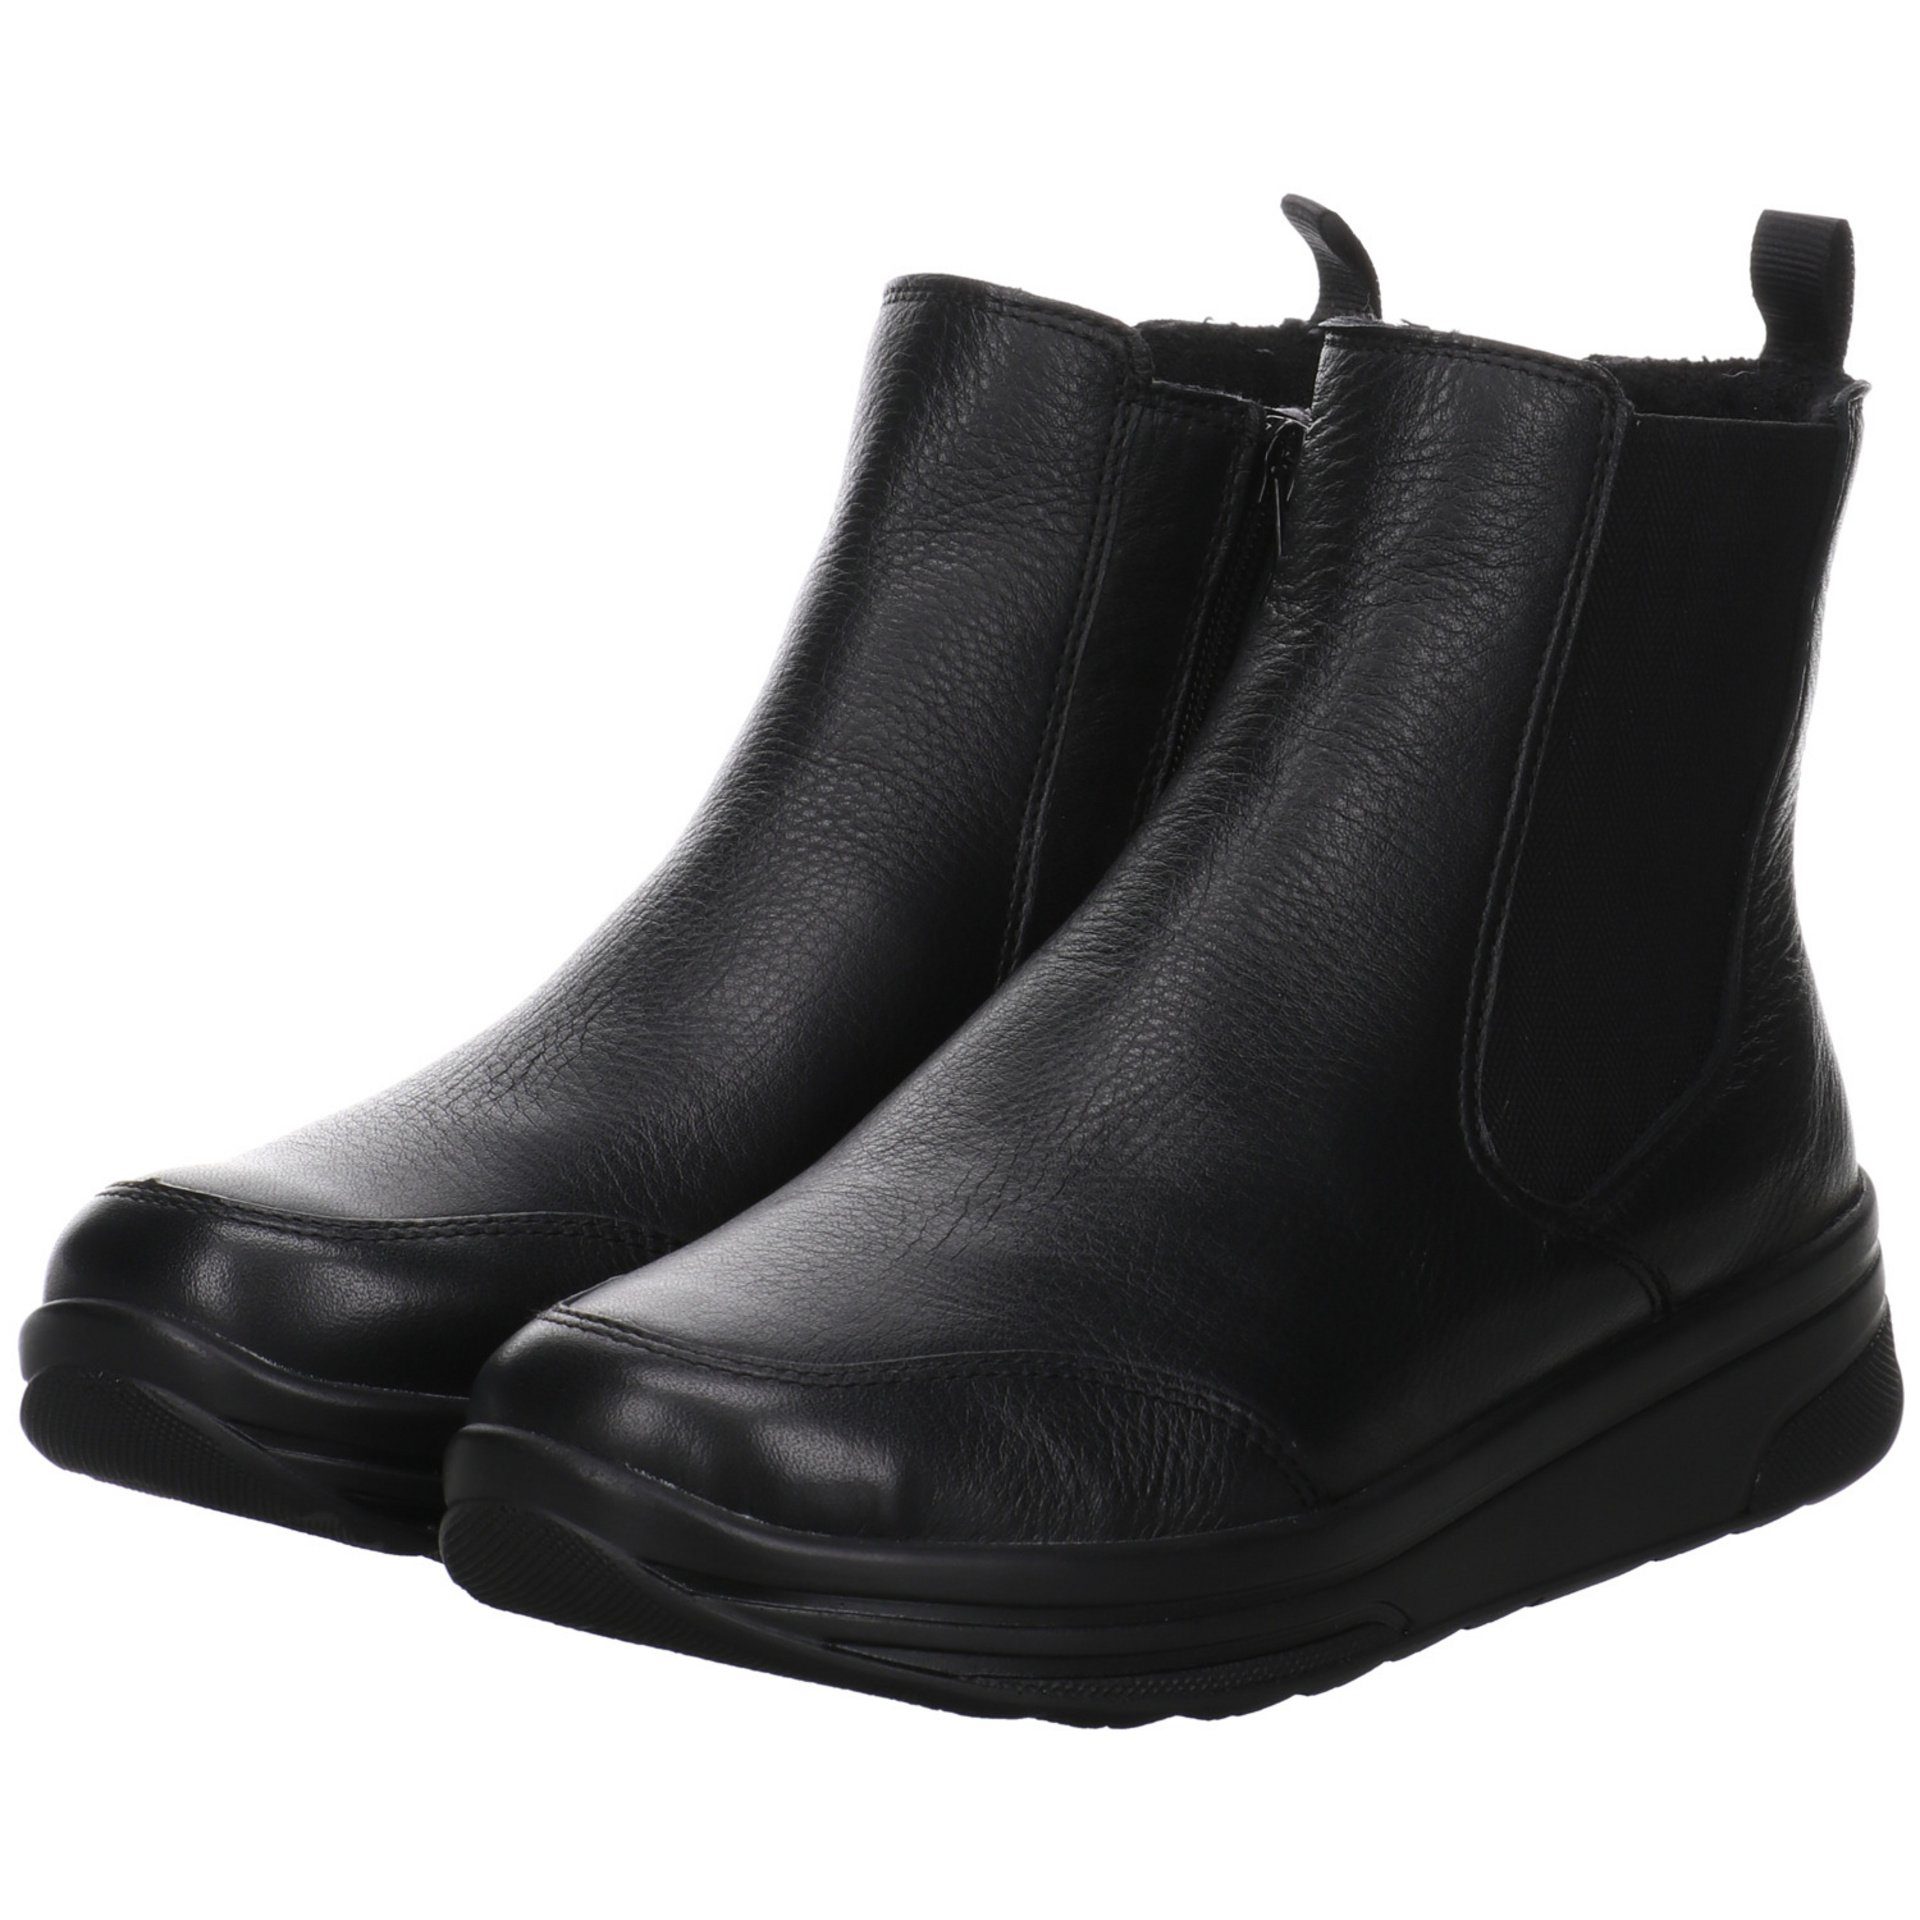 Stiefel 046832 Sapporo-S Glattleder Damen Ara Schuhe Boots 2.0 Chelsea schwarz Stiefelette